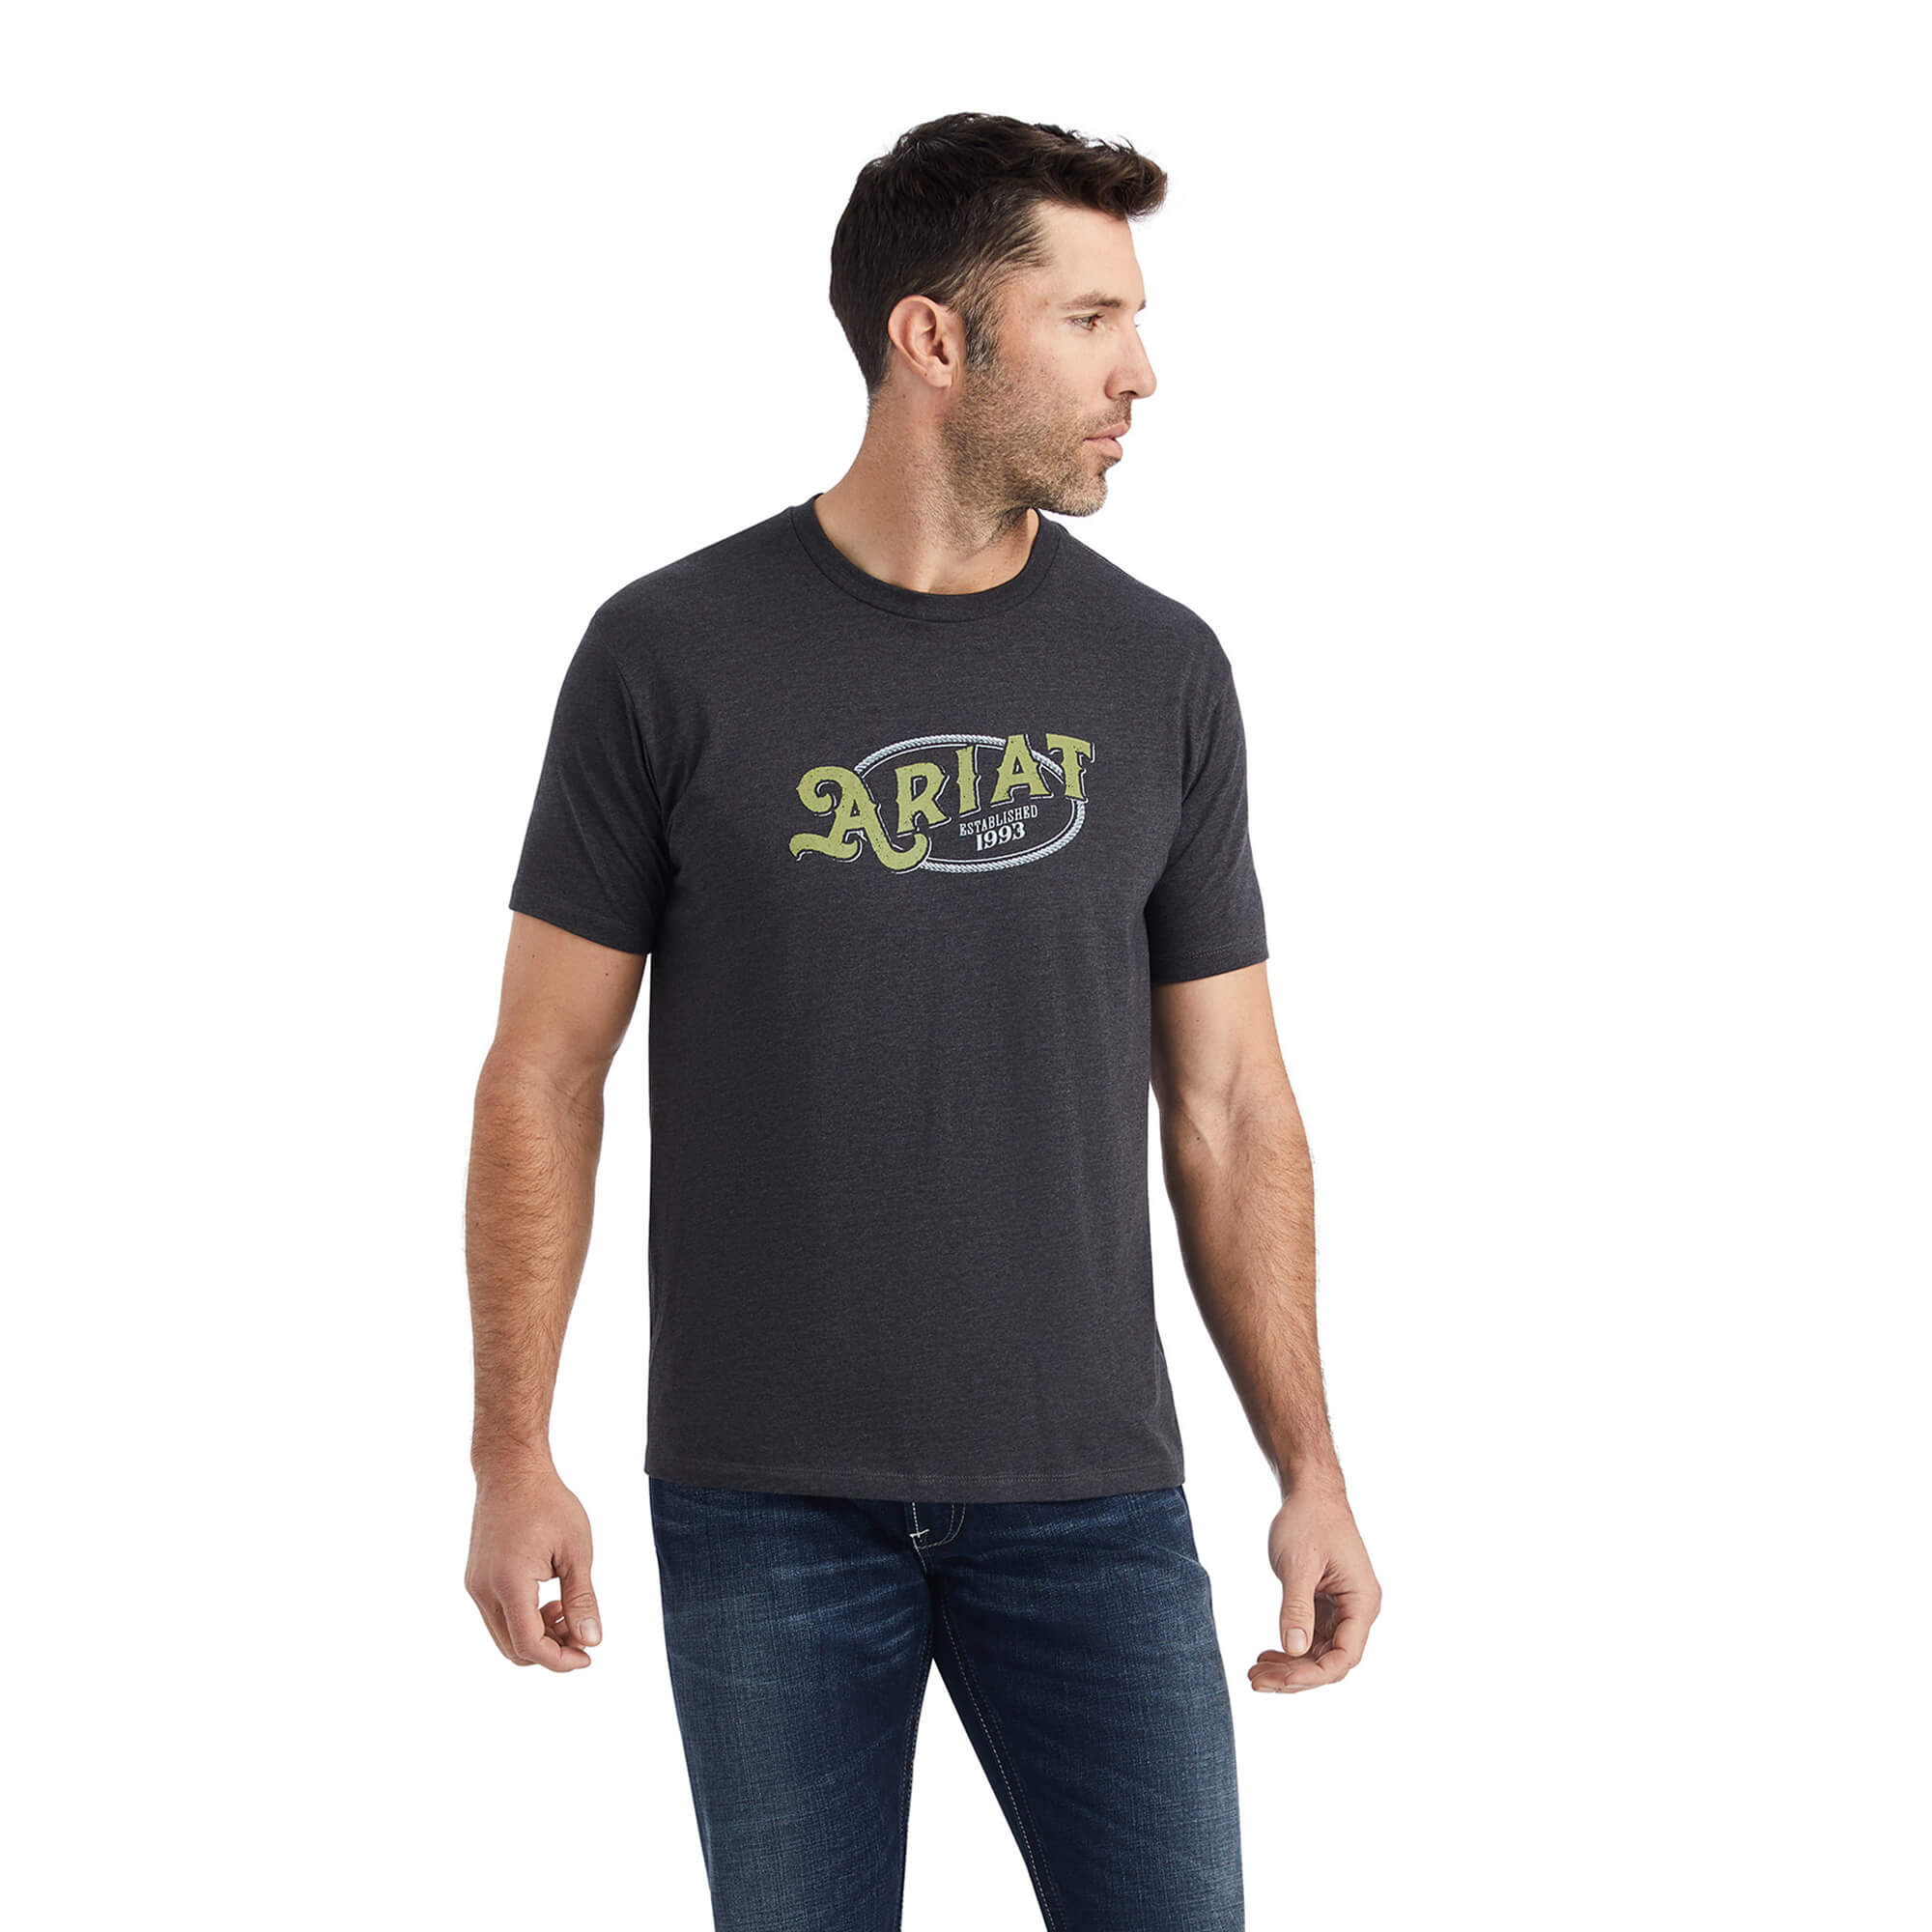 Ariat / Men's Ariat Rope Oval T-Shirt